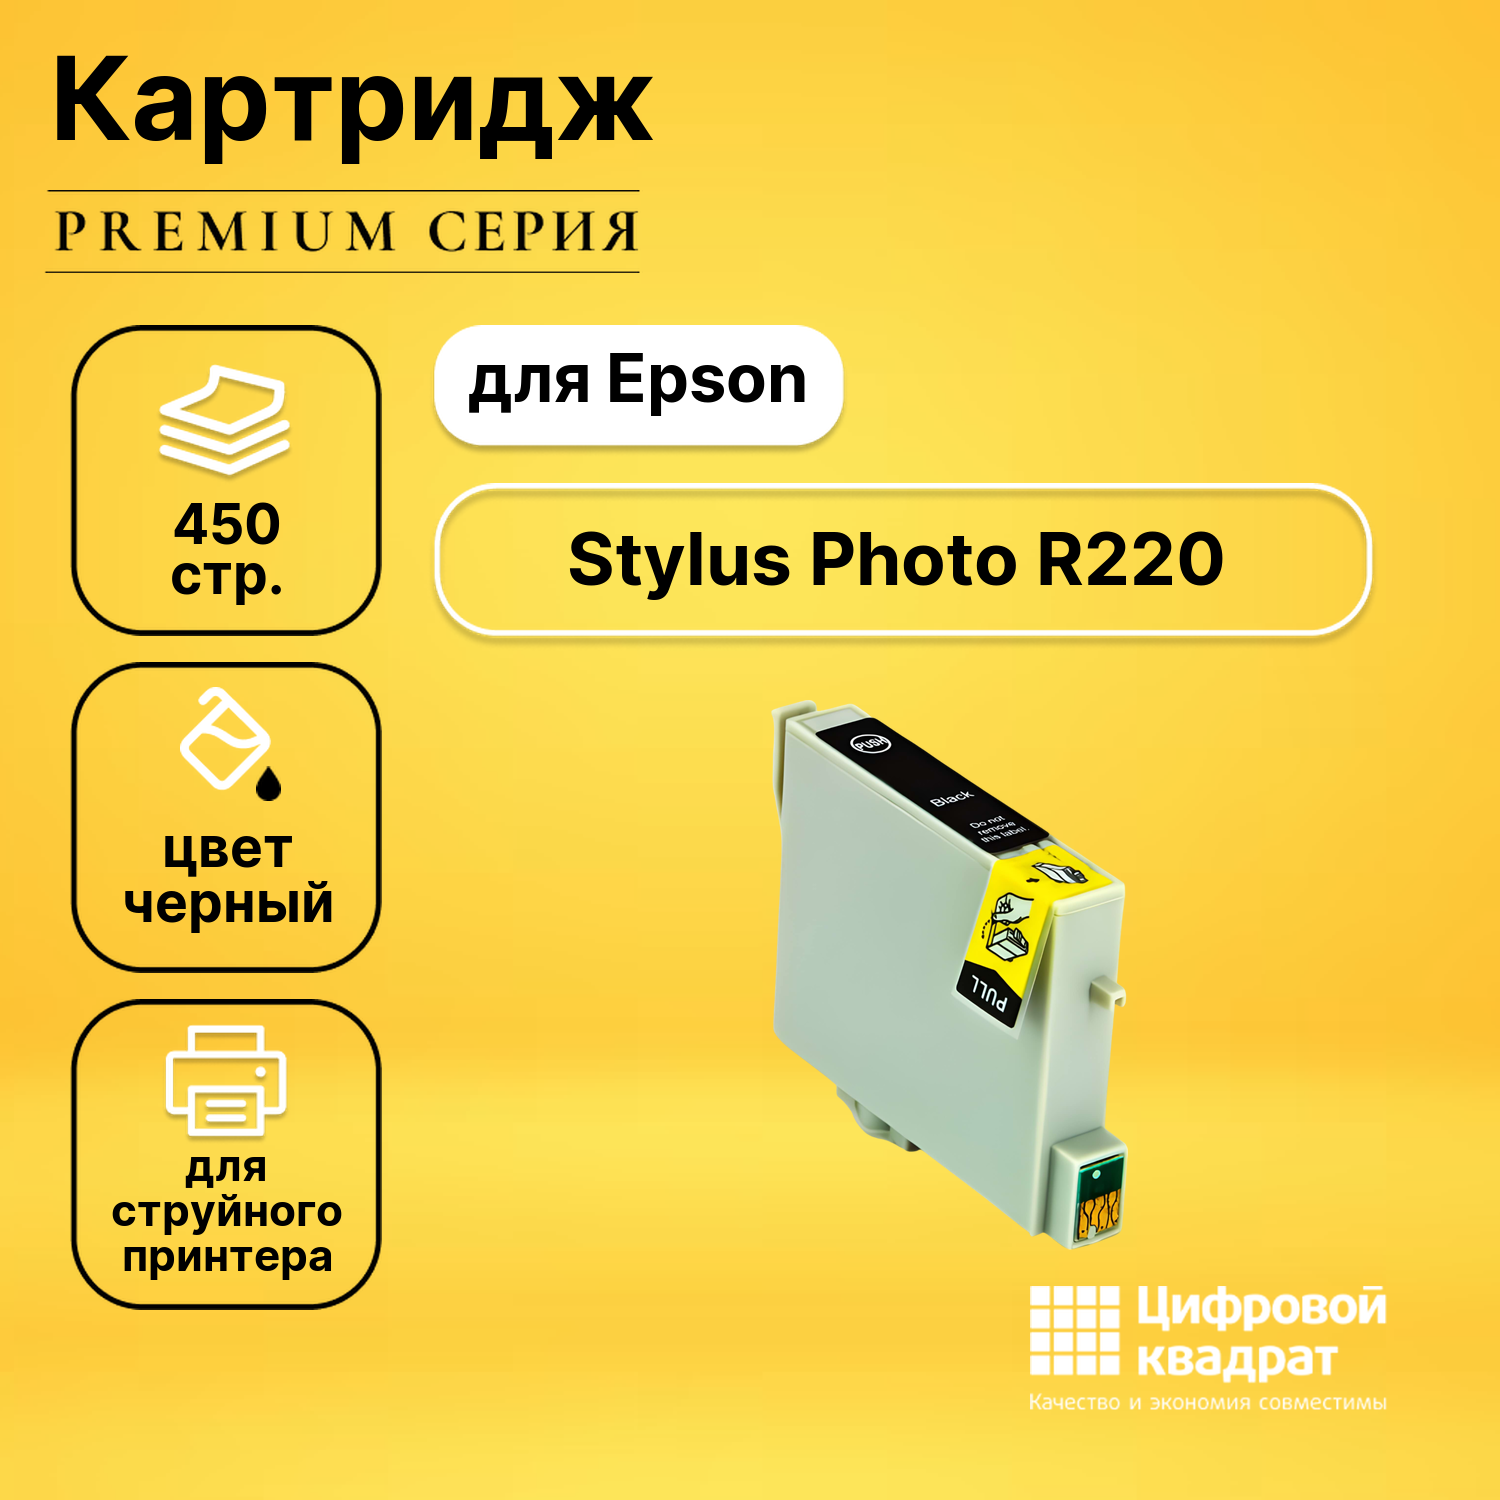 Картридж DS для Epson Stylus Photo R220 совместимый